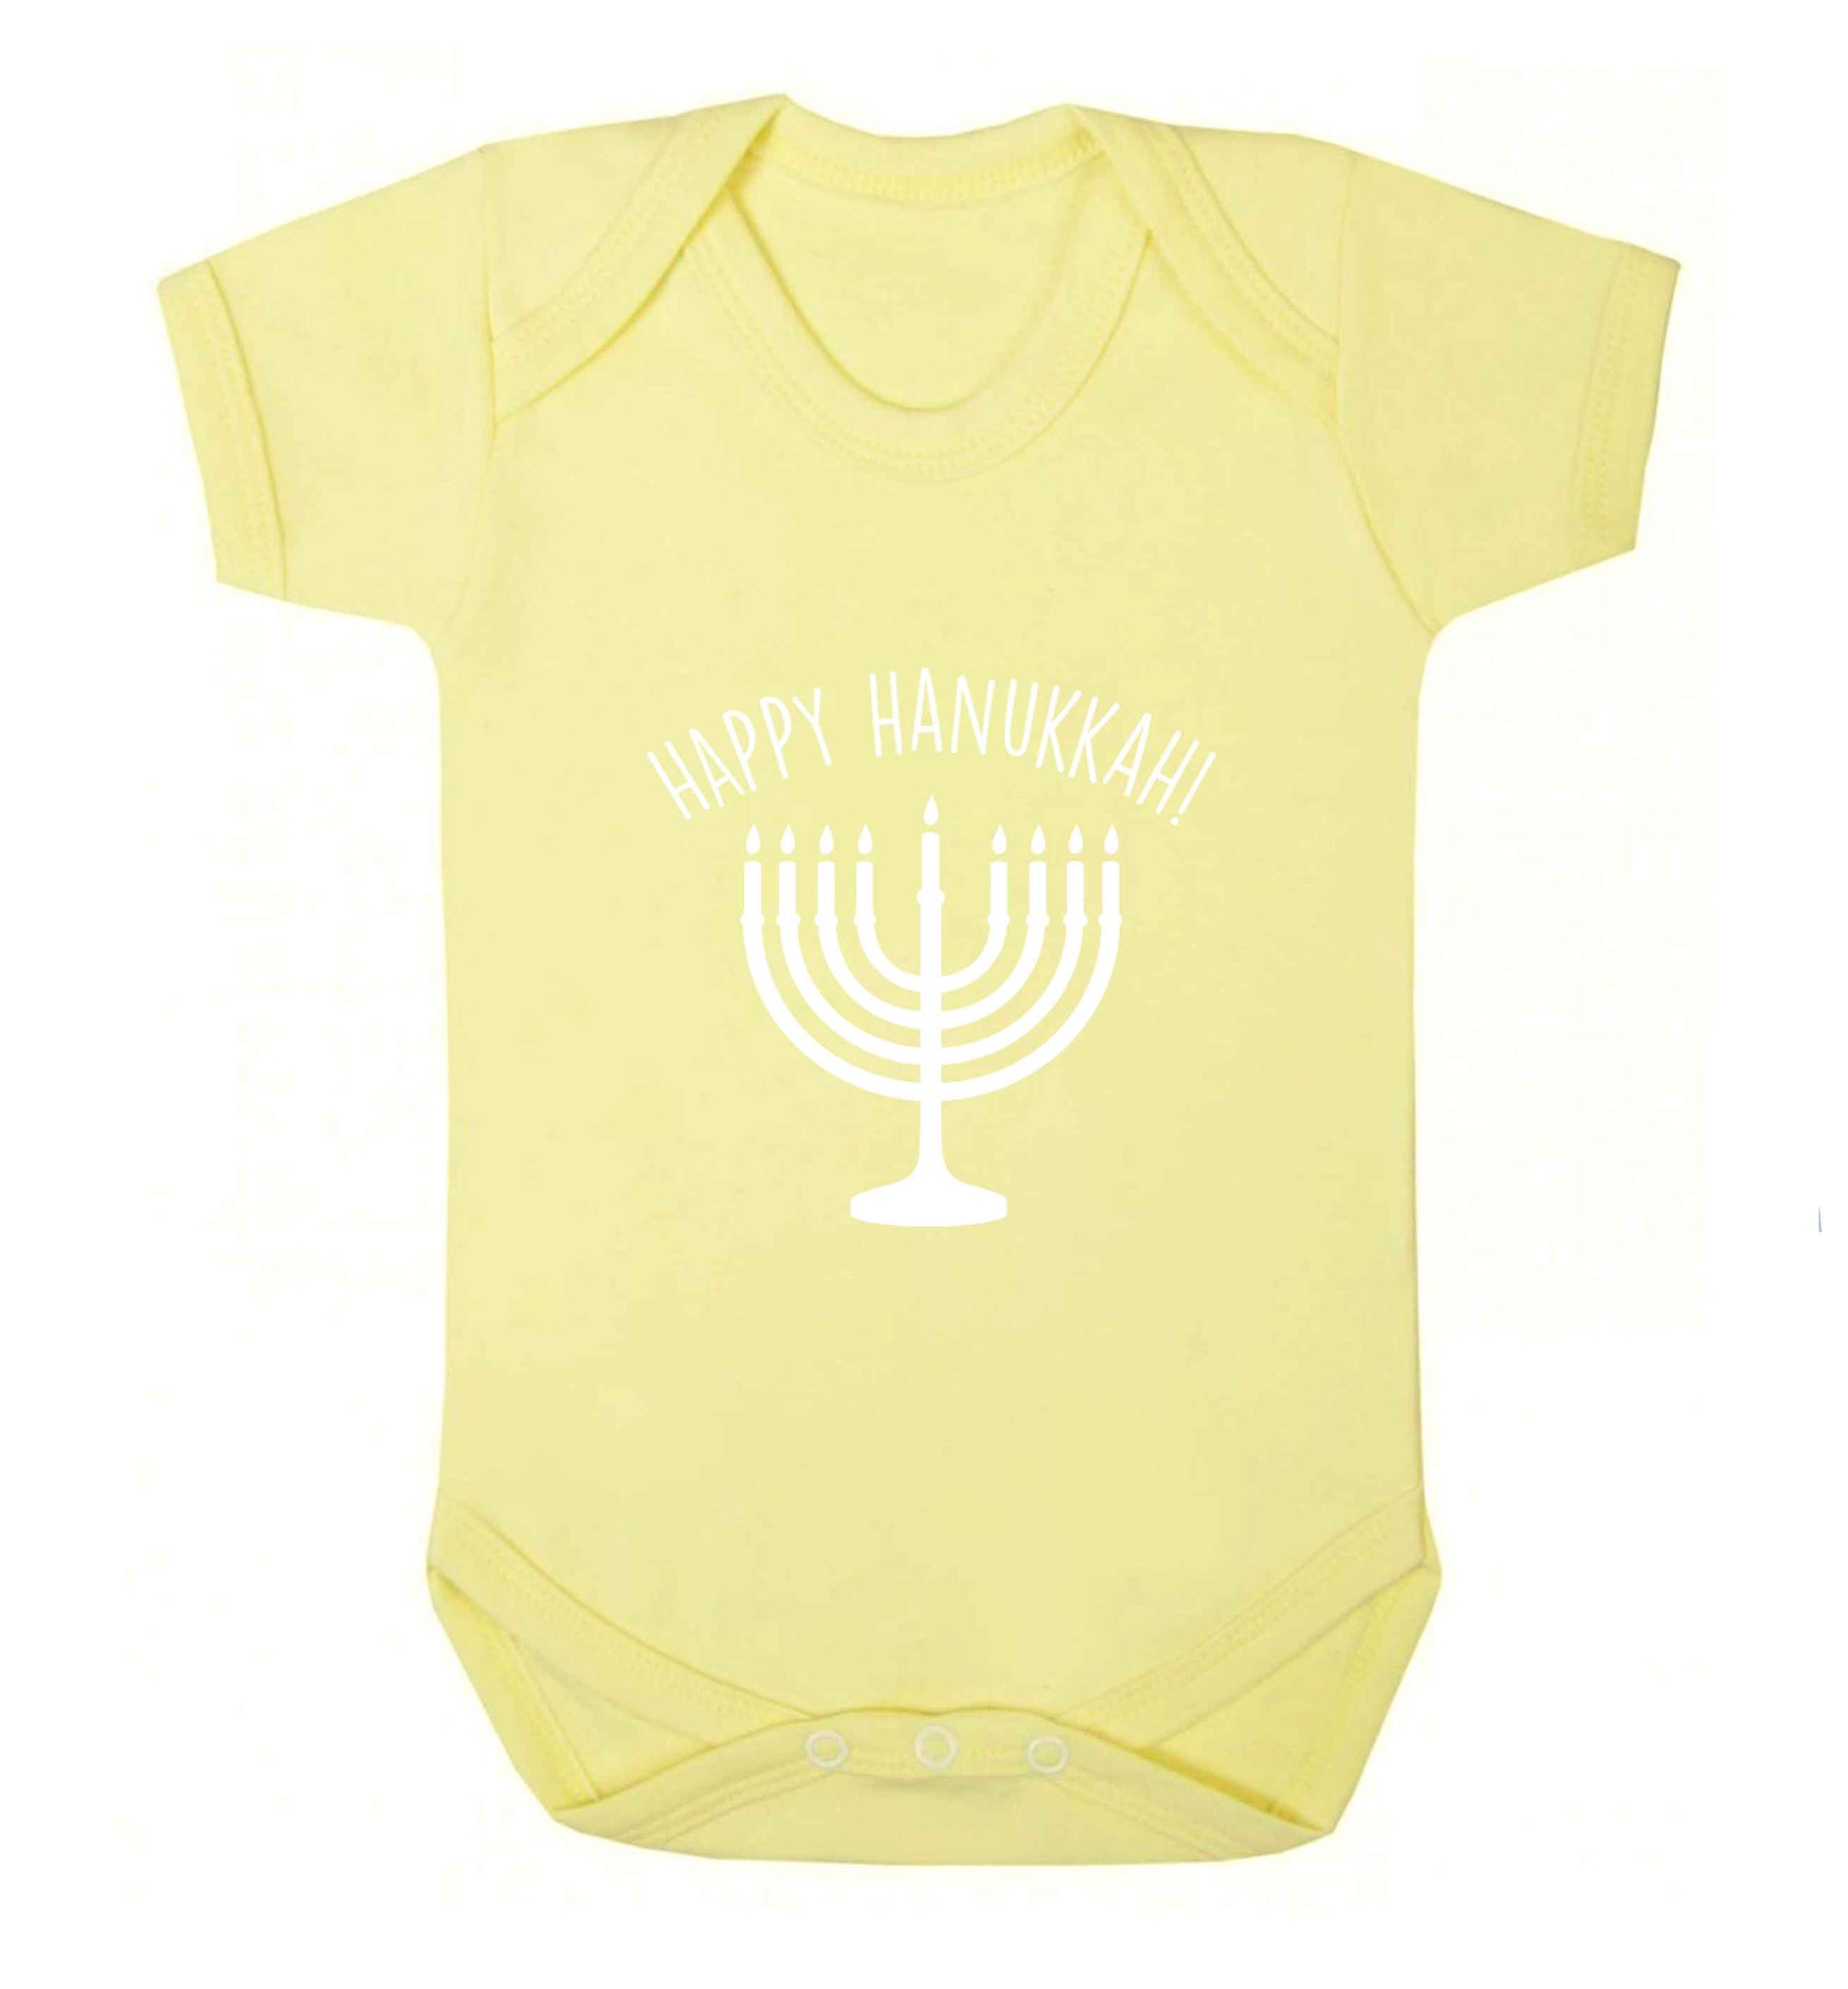 Happy hanukkah baby vest pale yellow 18-24 months